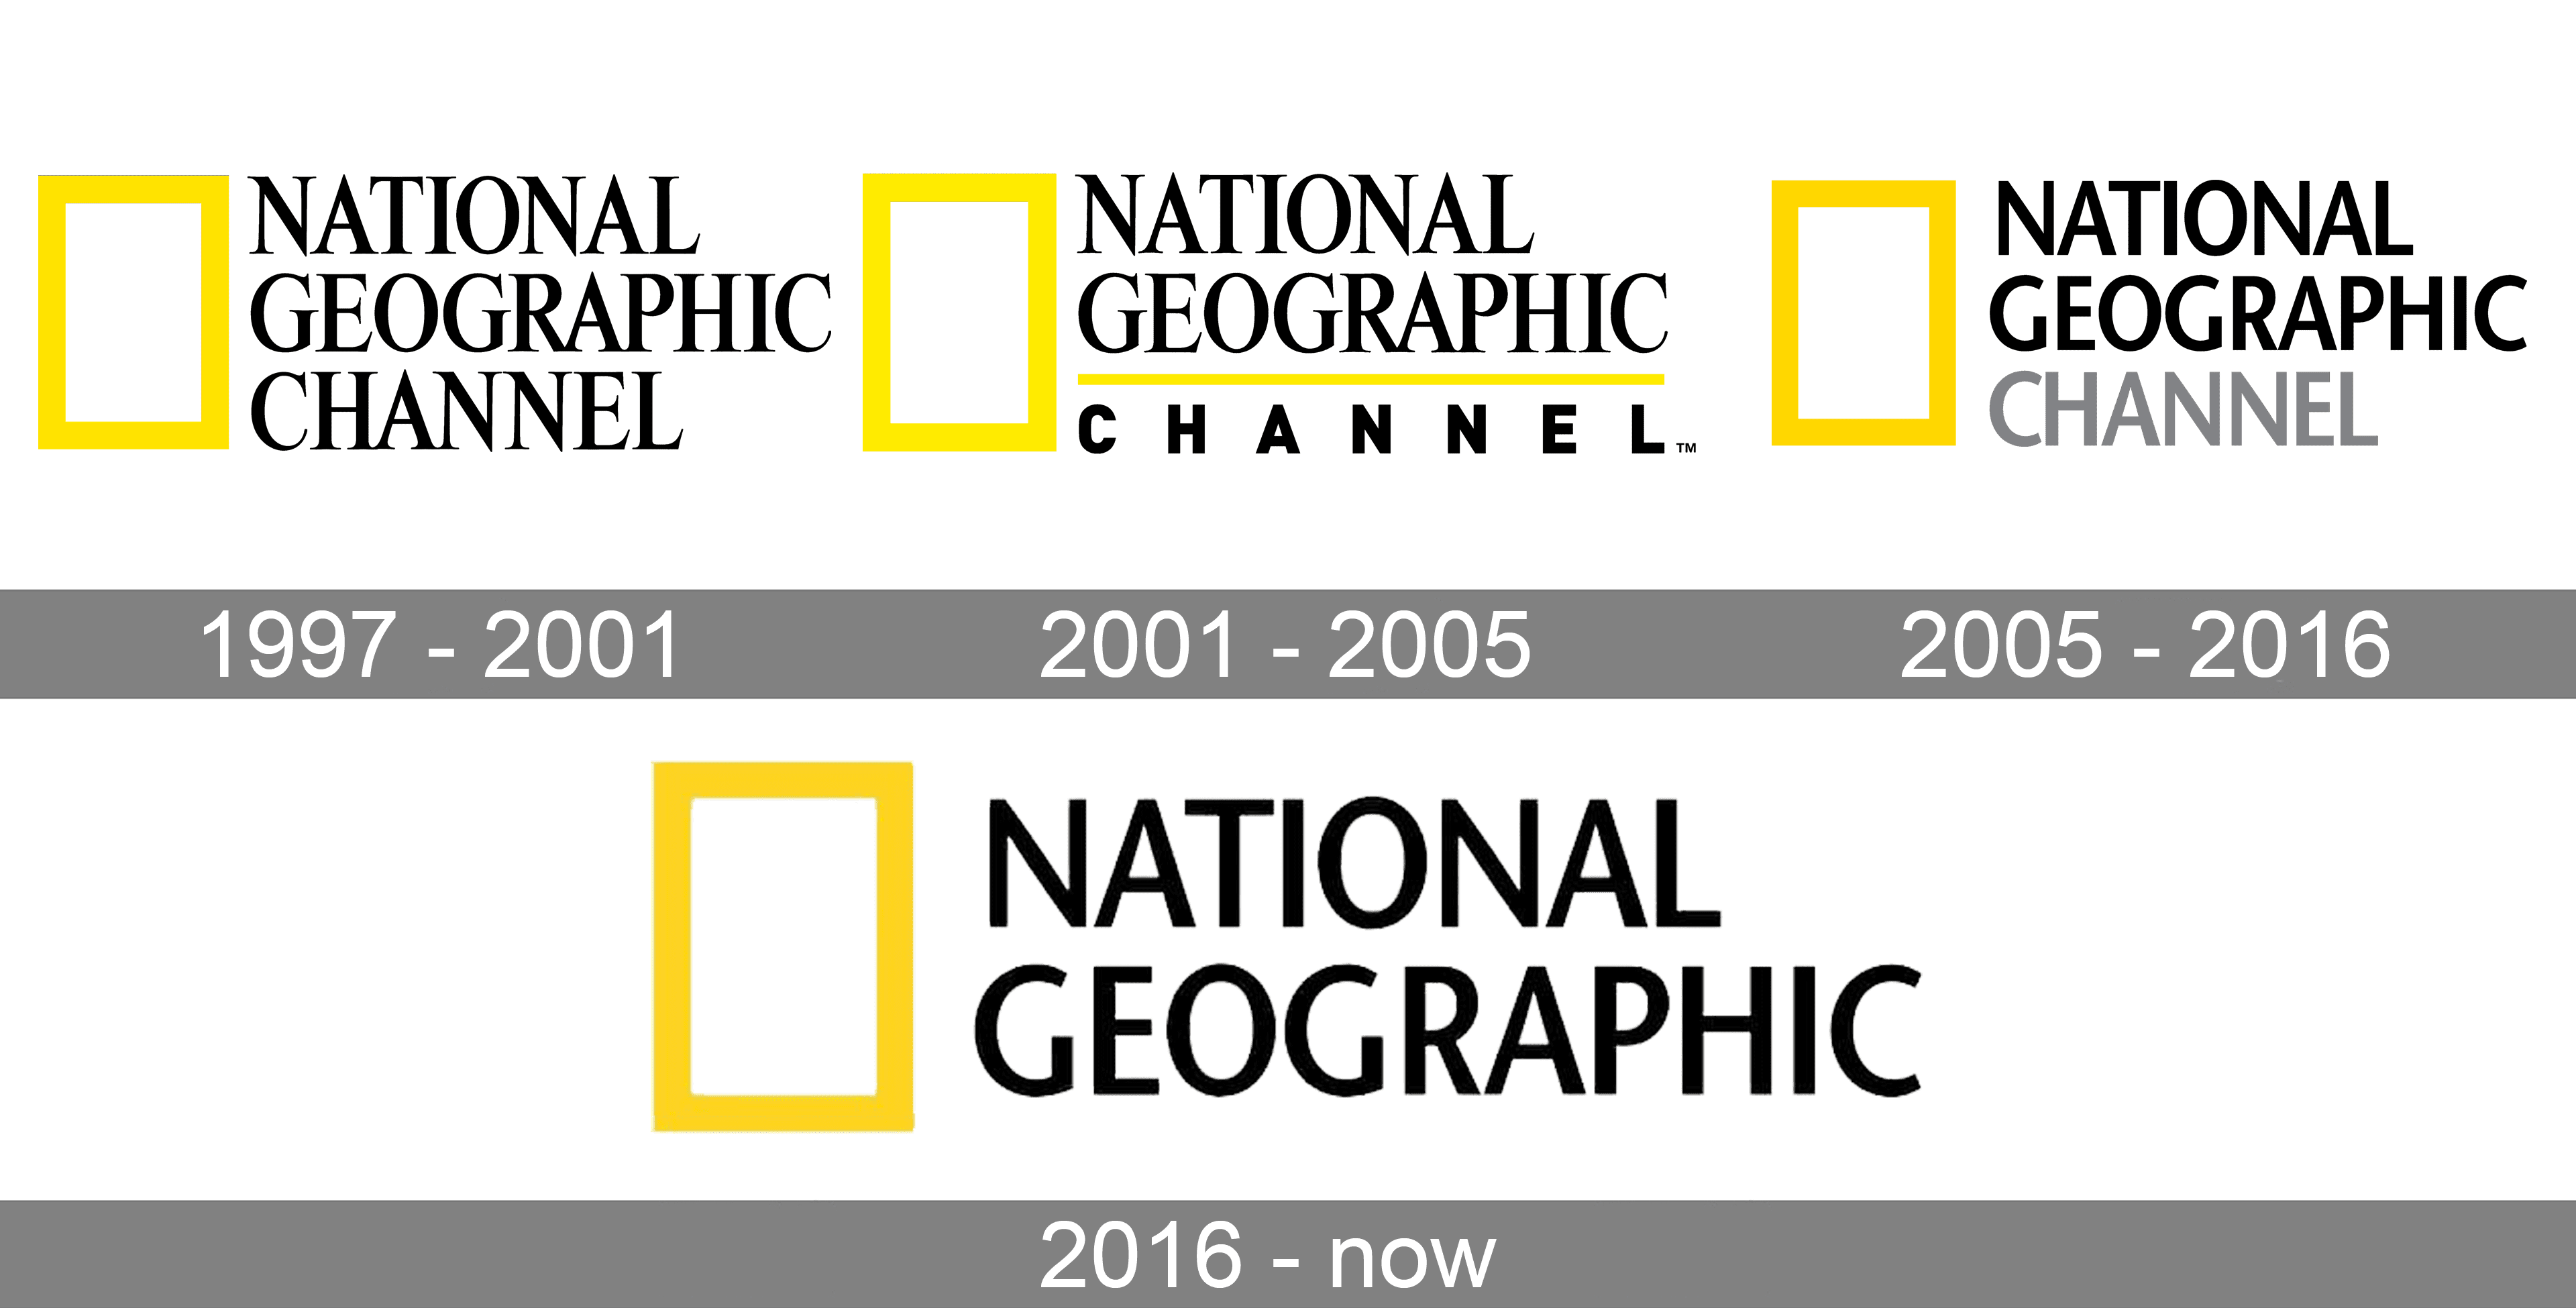 national geographic society logo